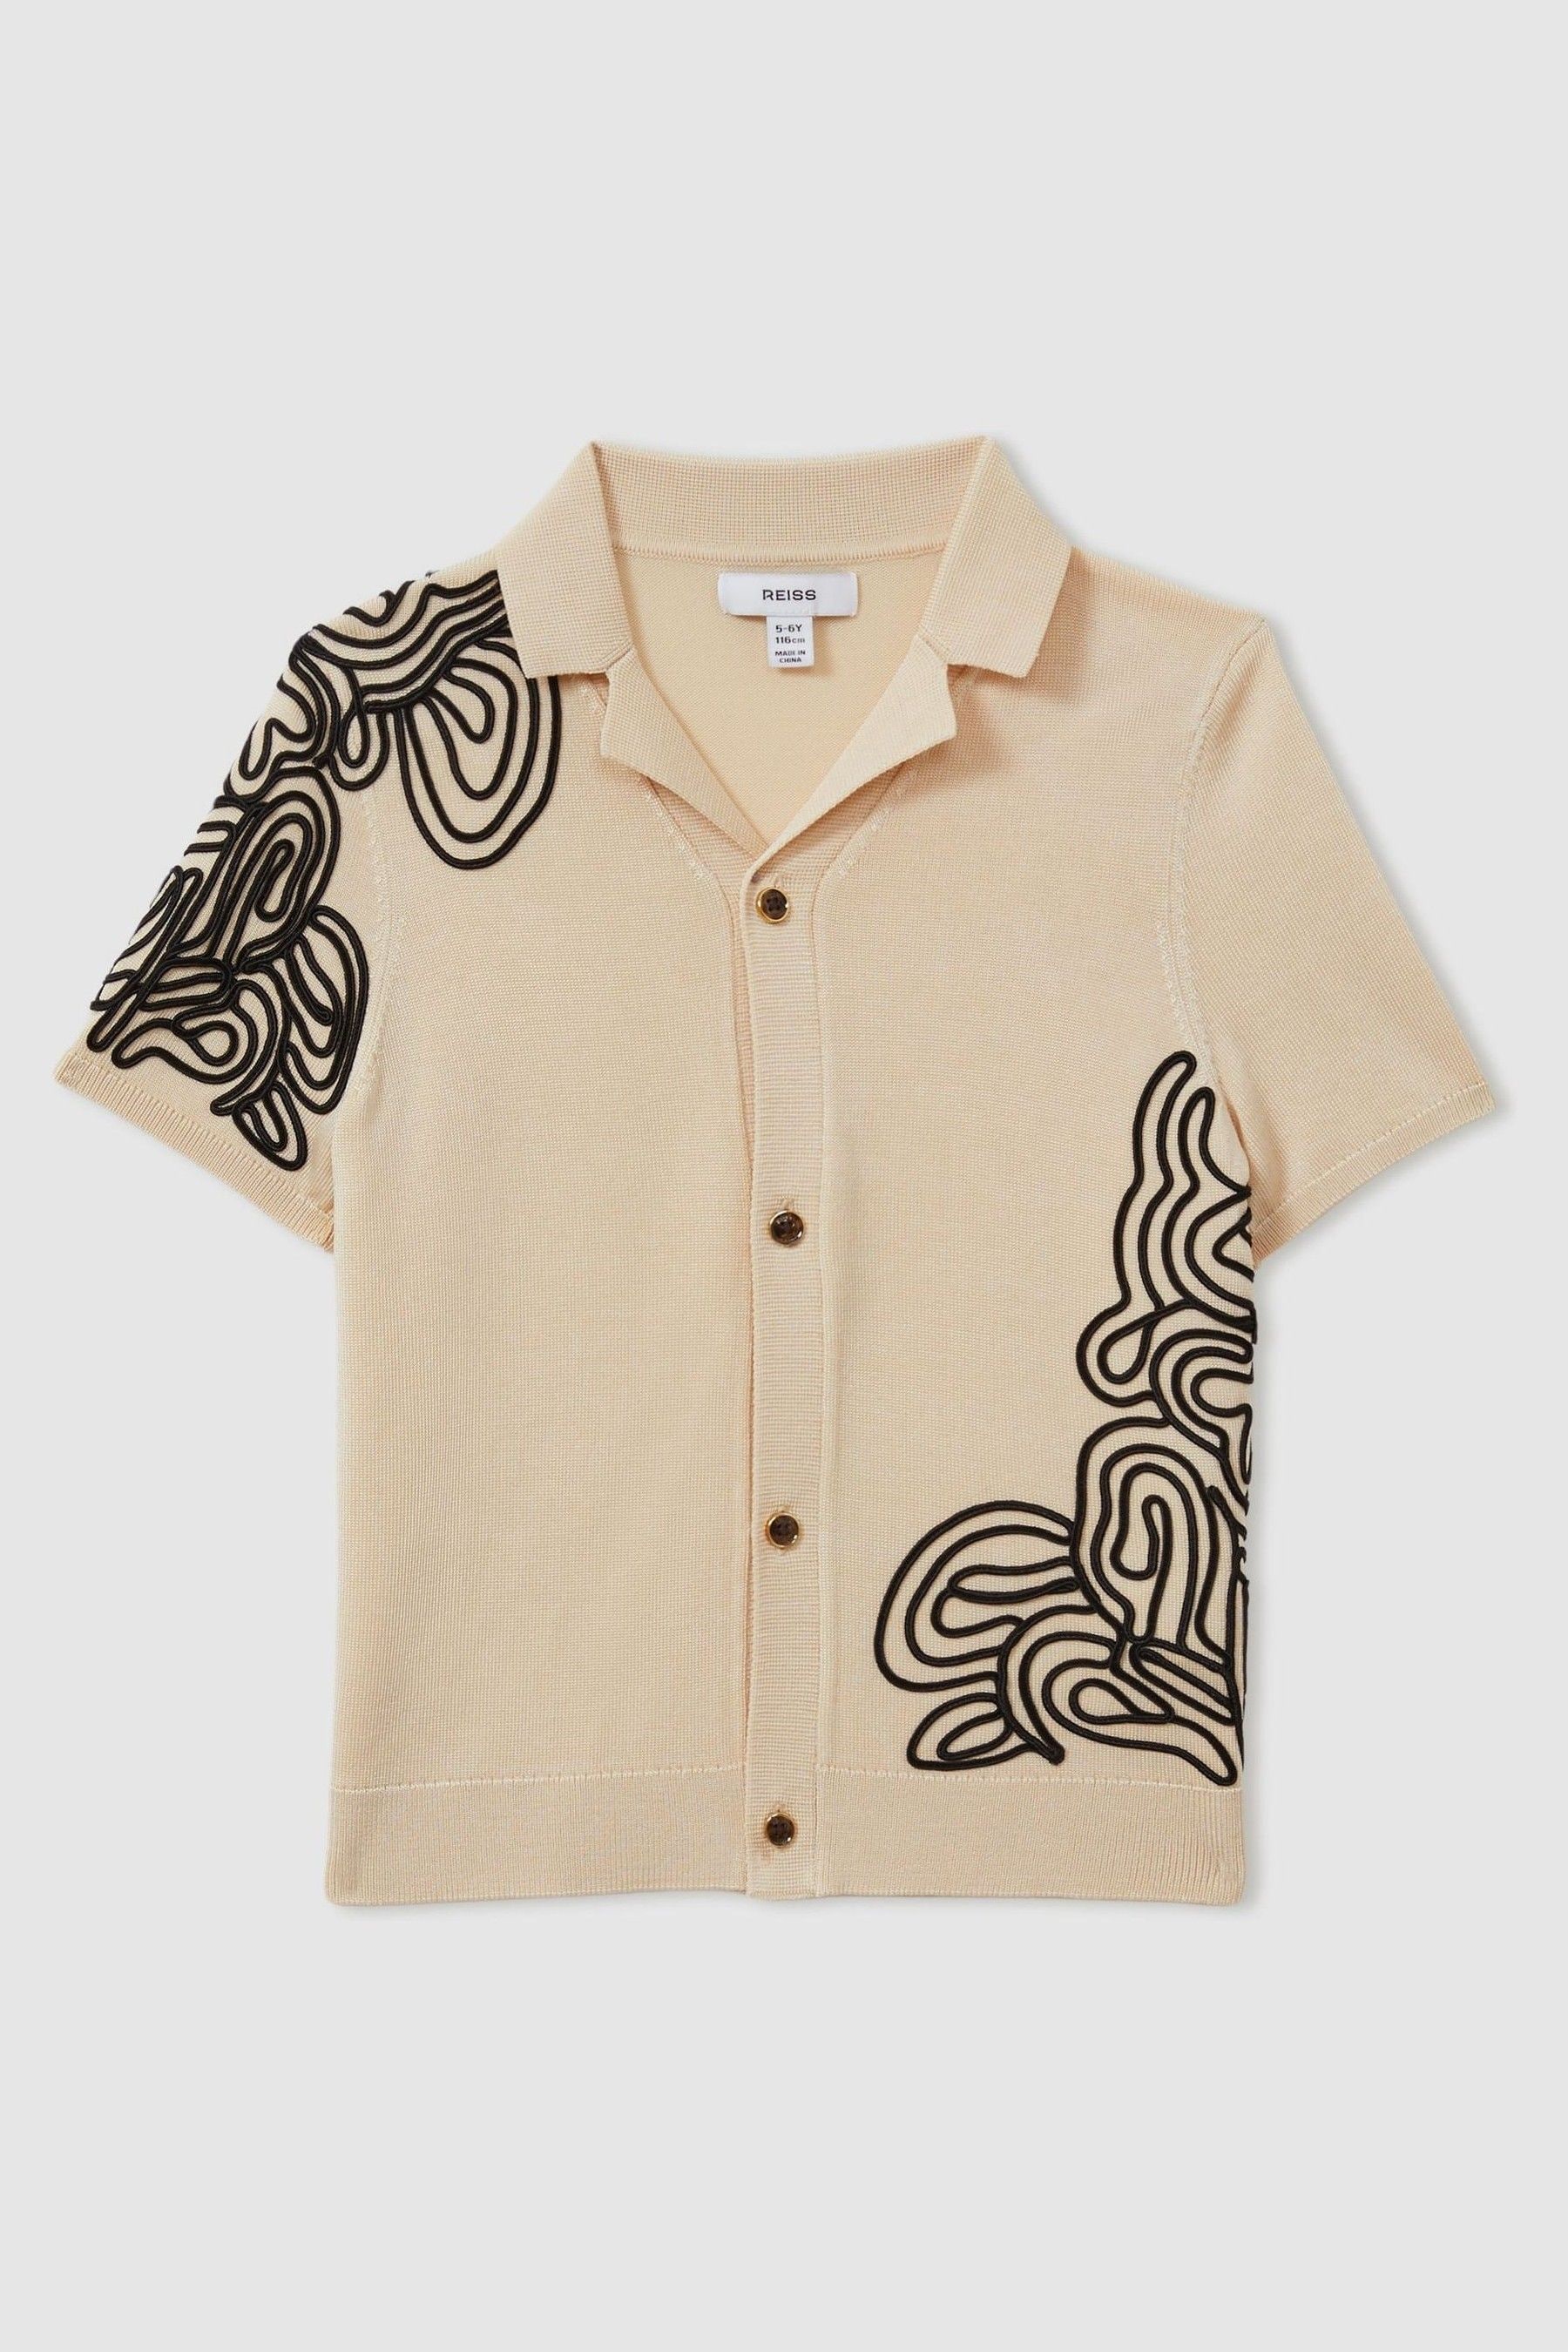 Romance - Off White/Black Teen Jersey Embroidered Cuban Collar Shirt,